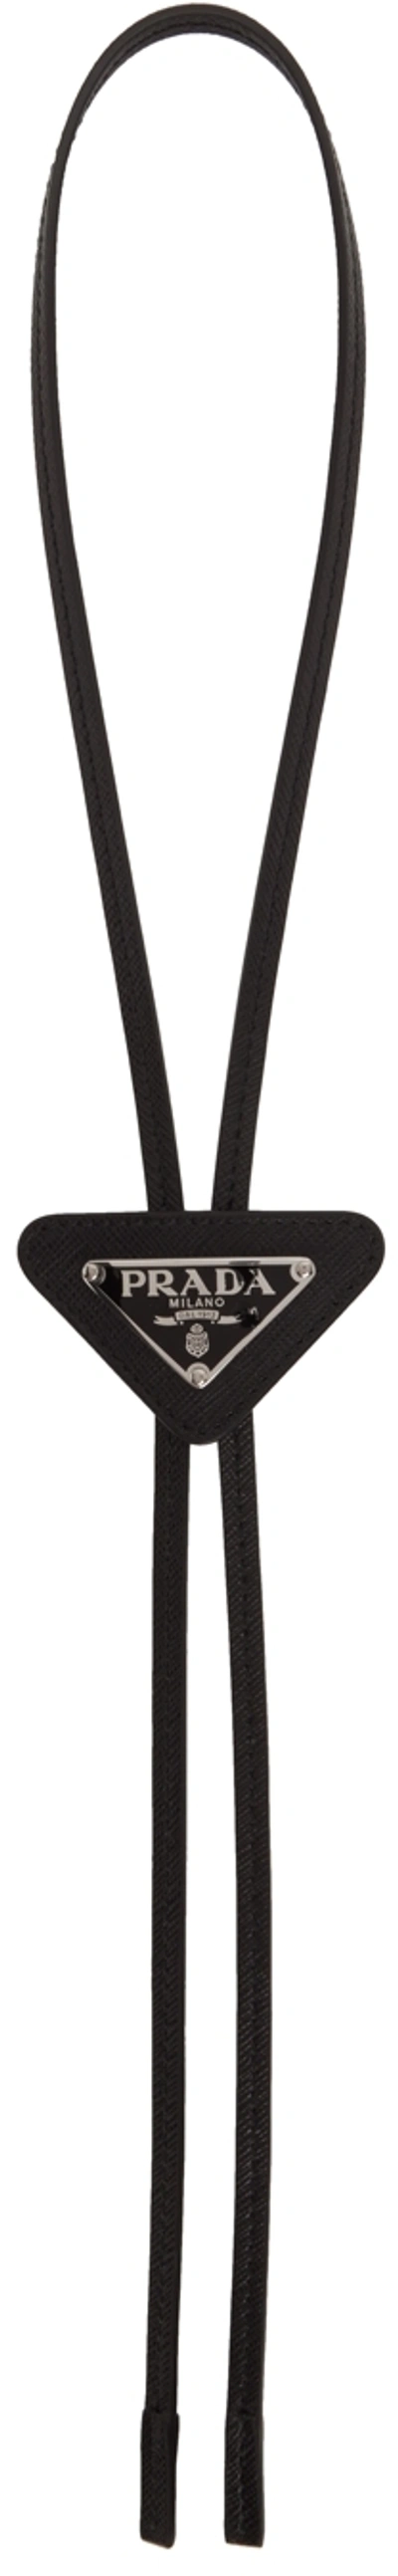 brushed leather bolo tie, Prada